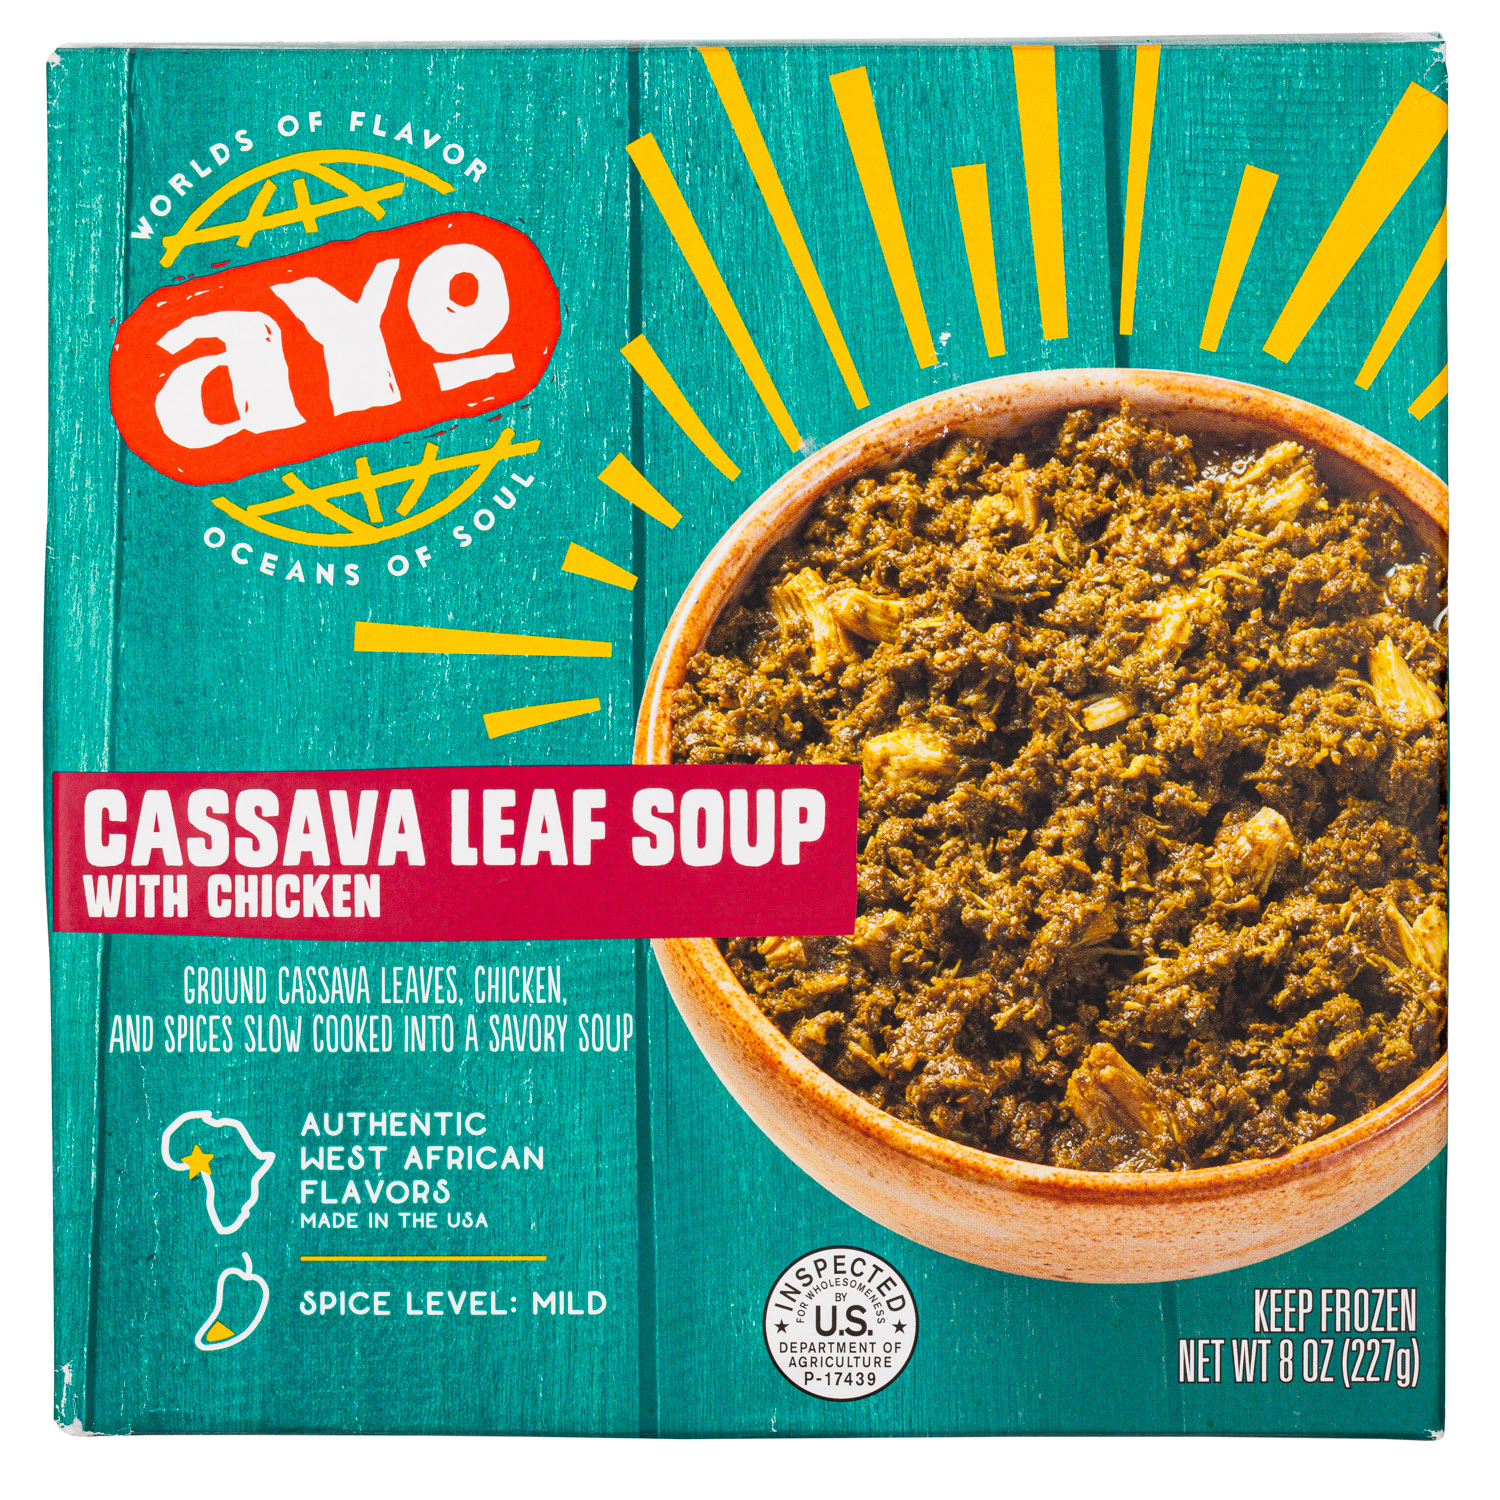 Cassava Leaf Soup